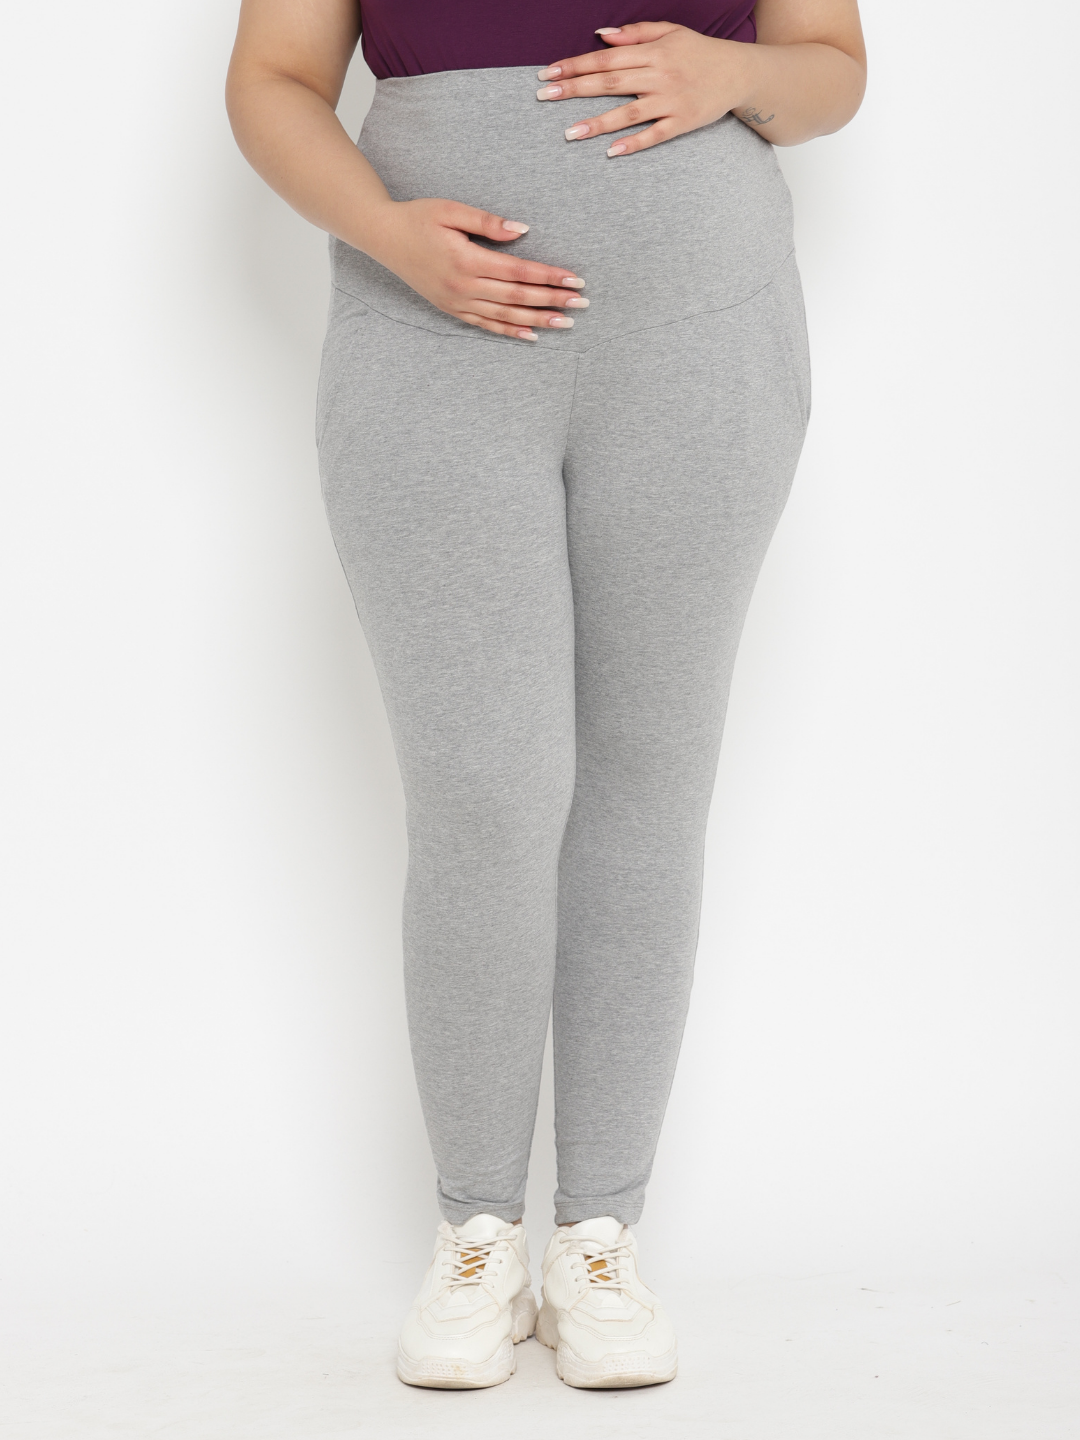 Buy Maternity Plus Size Leggings - Grey